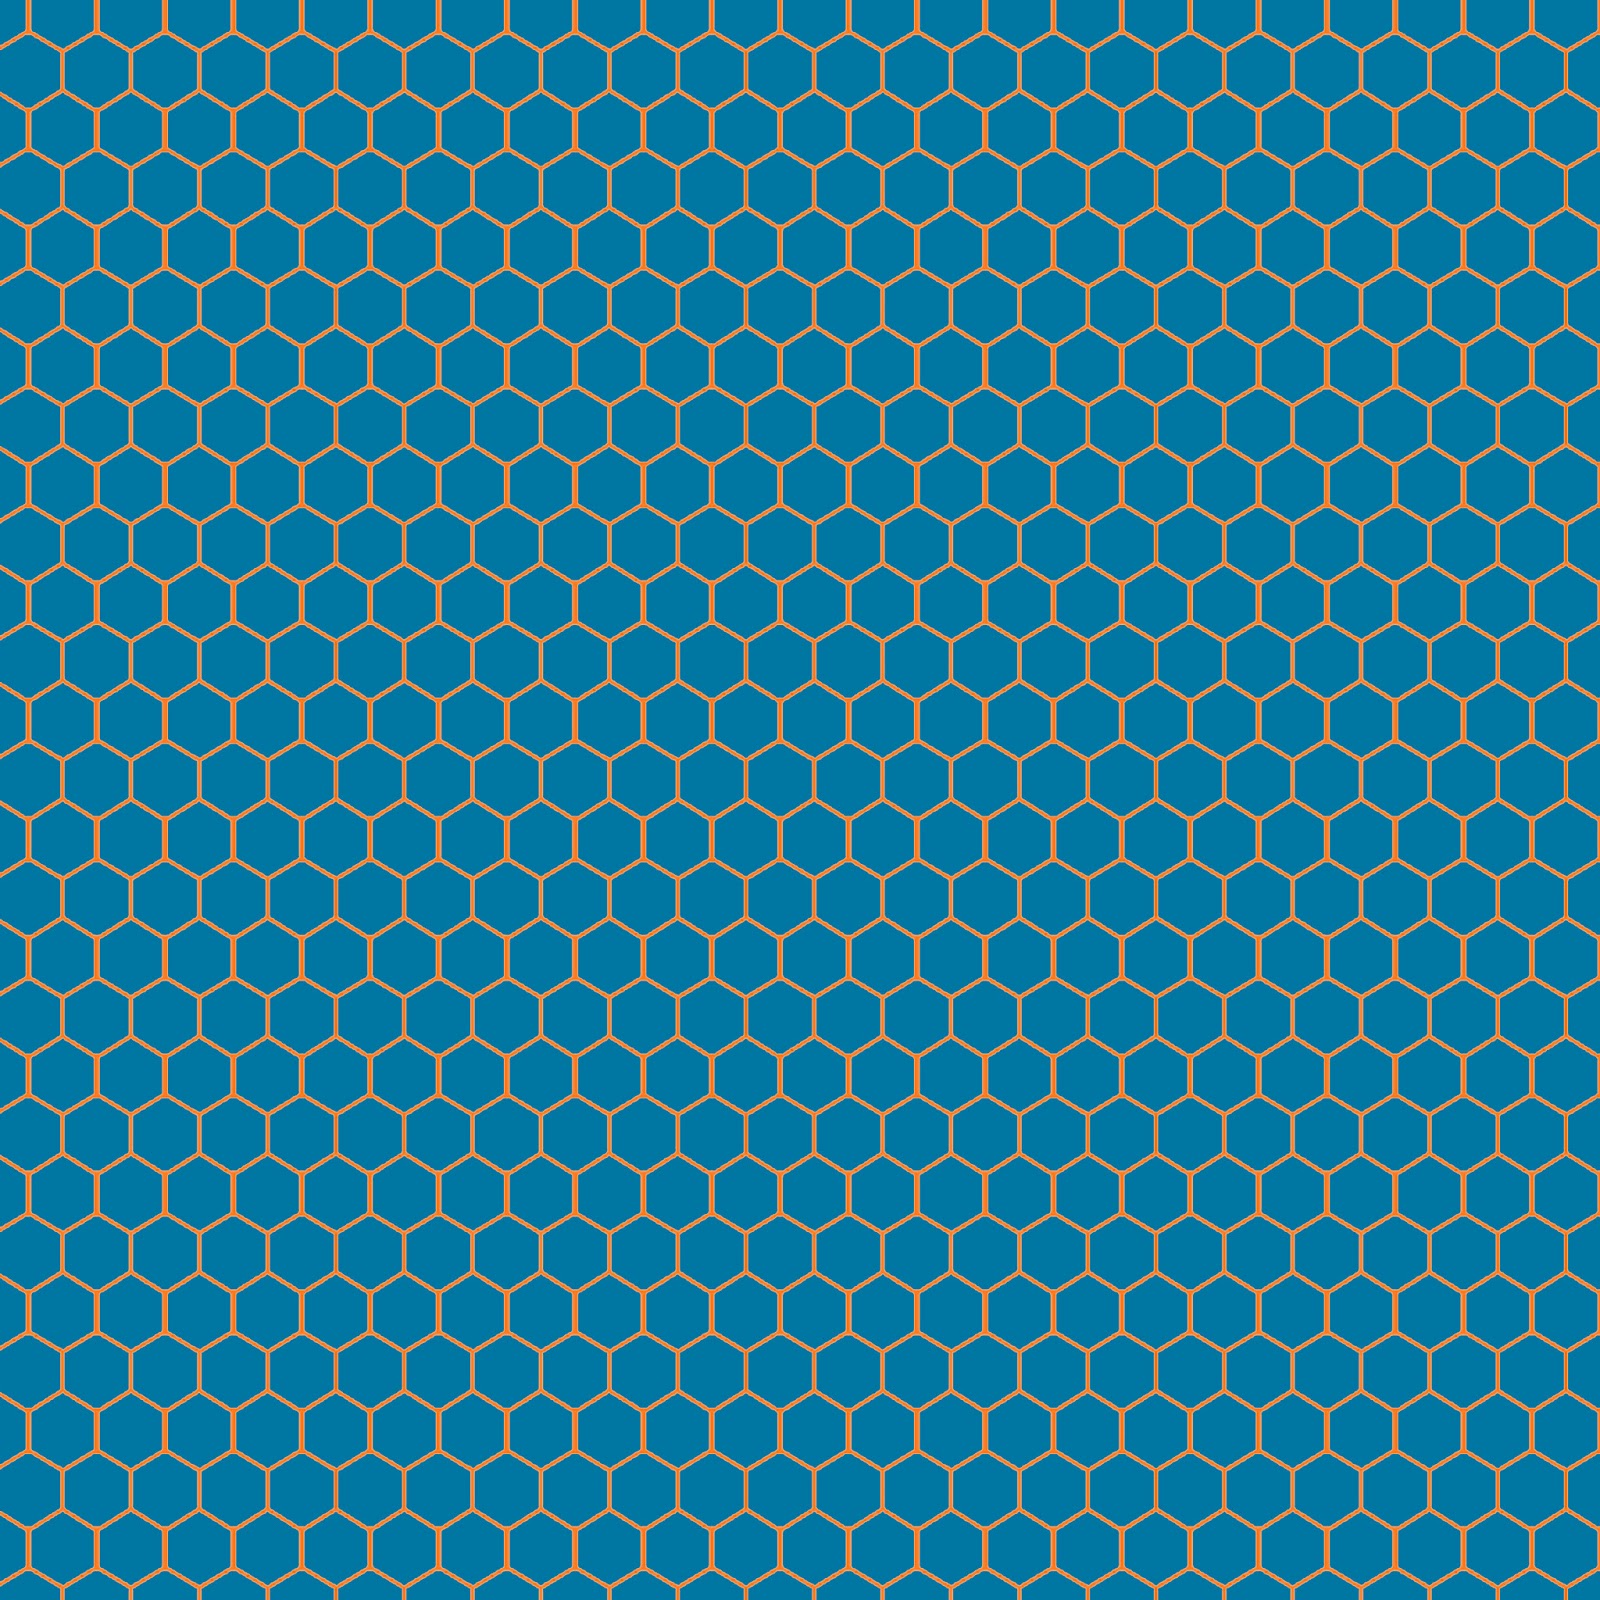 Coral And Navy Chevron Desktop Background Freebie background pattern 1600x1600